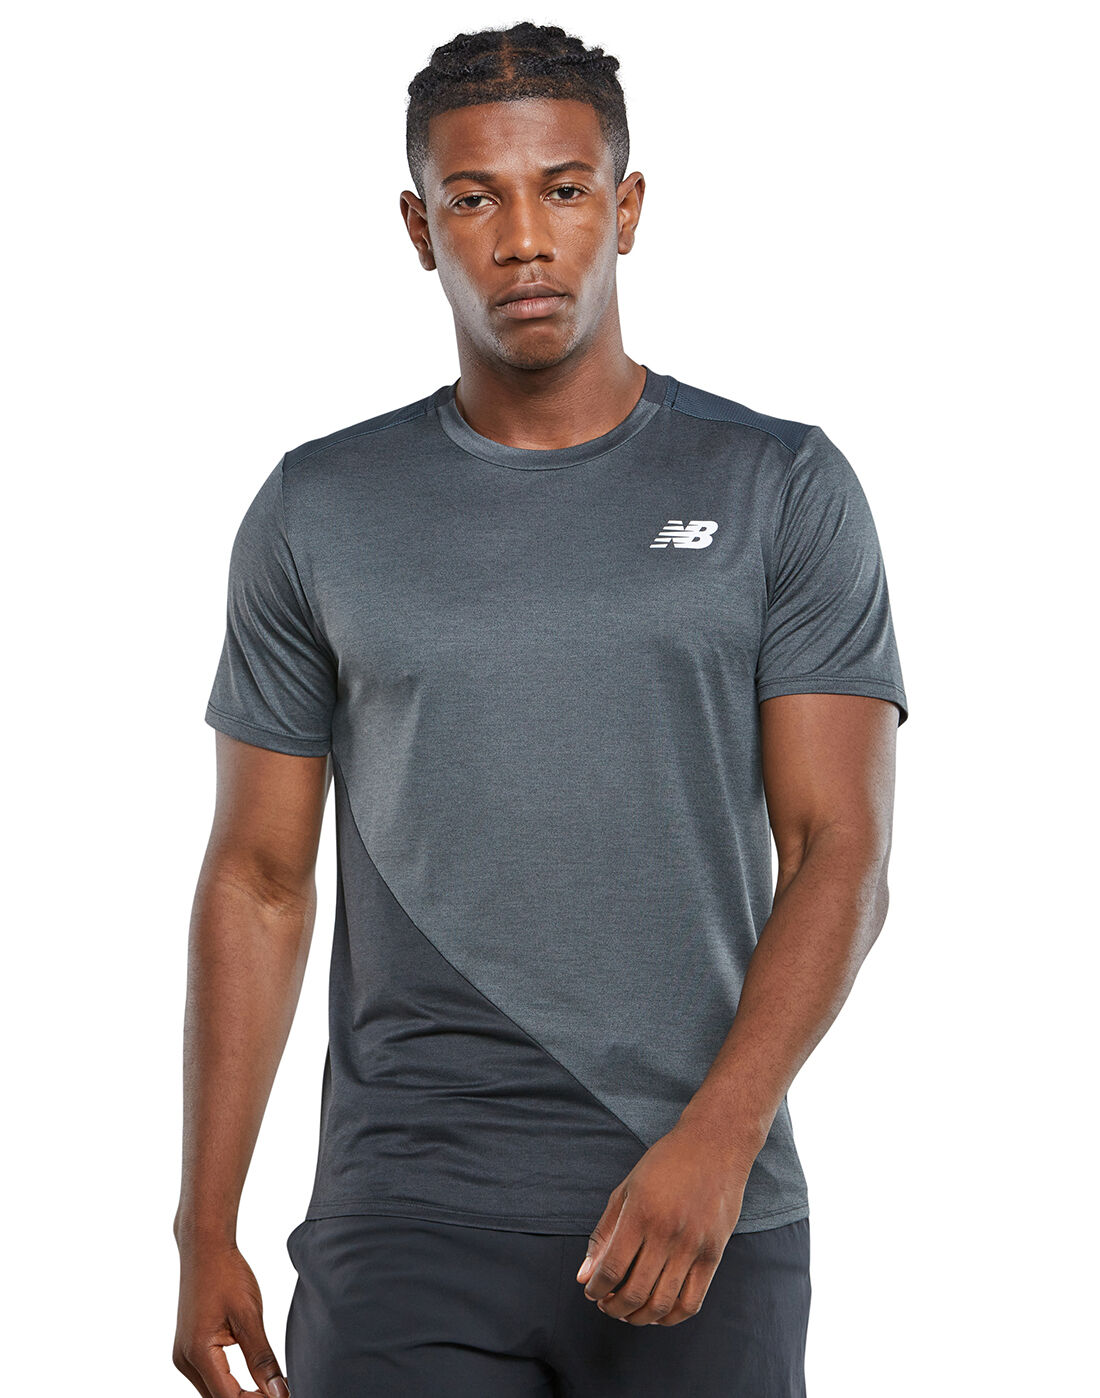 New Balance Mens Velocity Running T-Shirt - Grey | Life Style ...